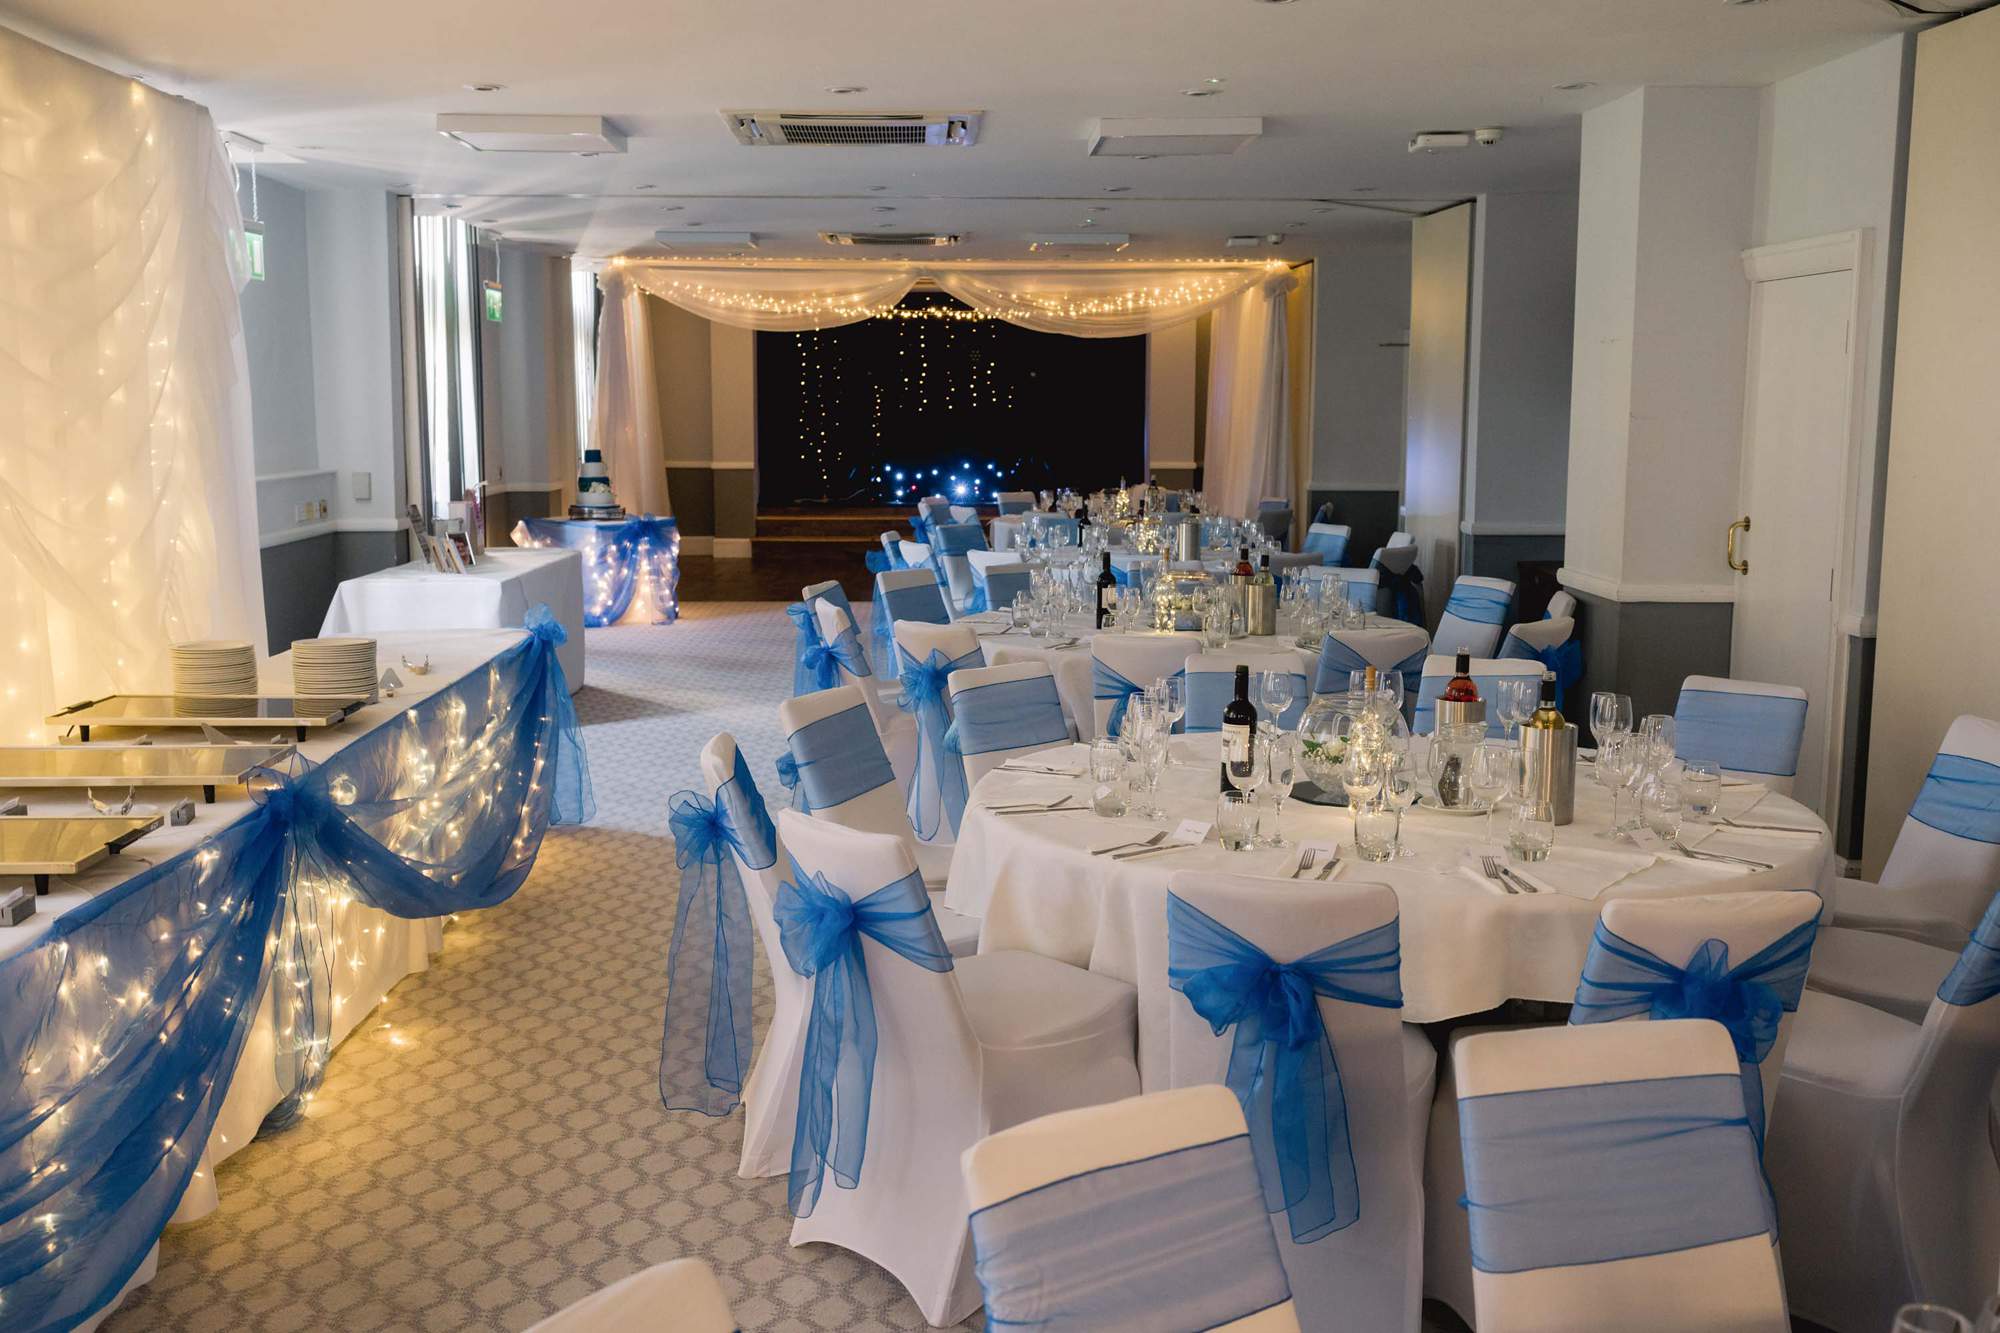 Wedding reception area at Avisford Park hotel in West Sussex.